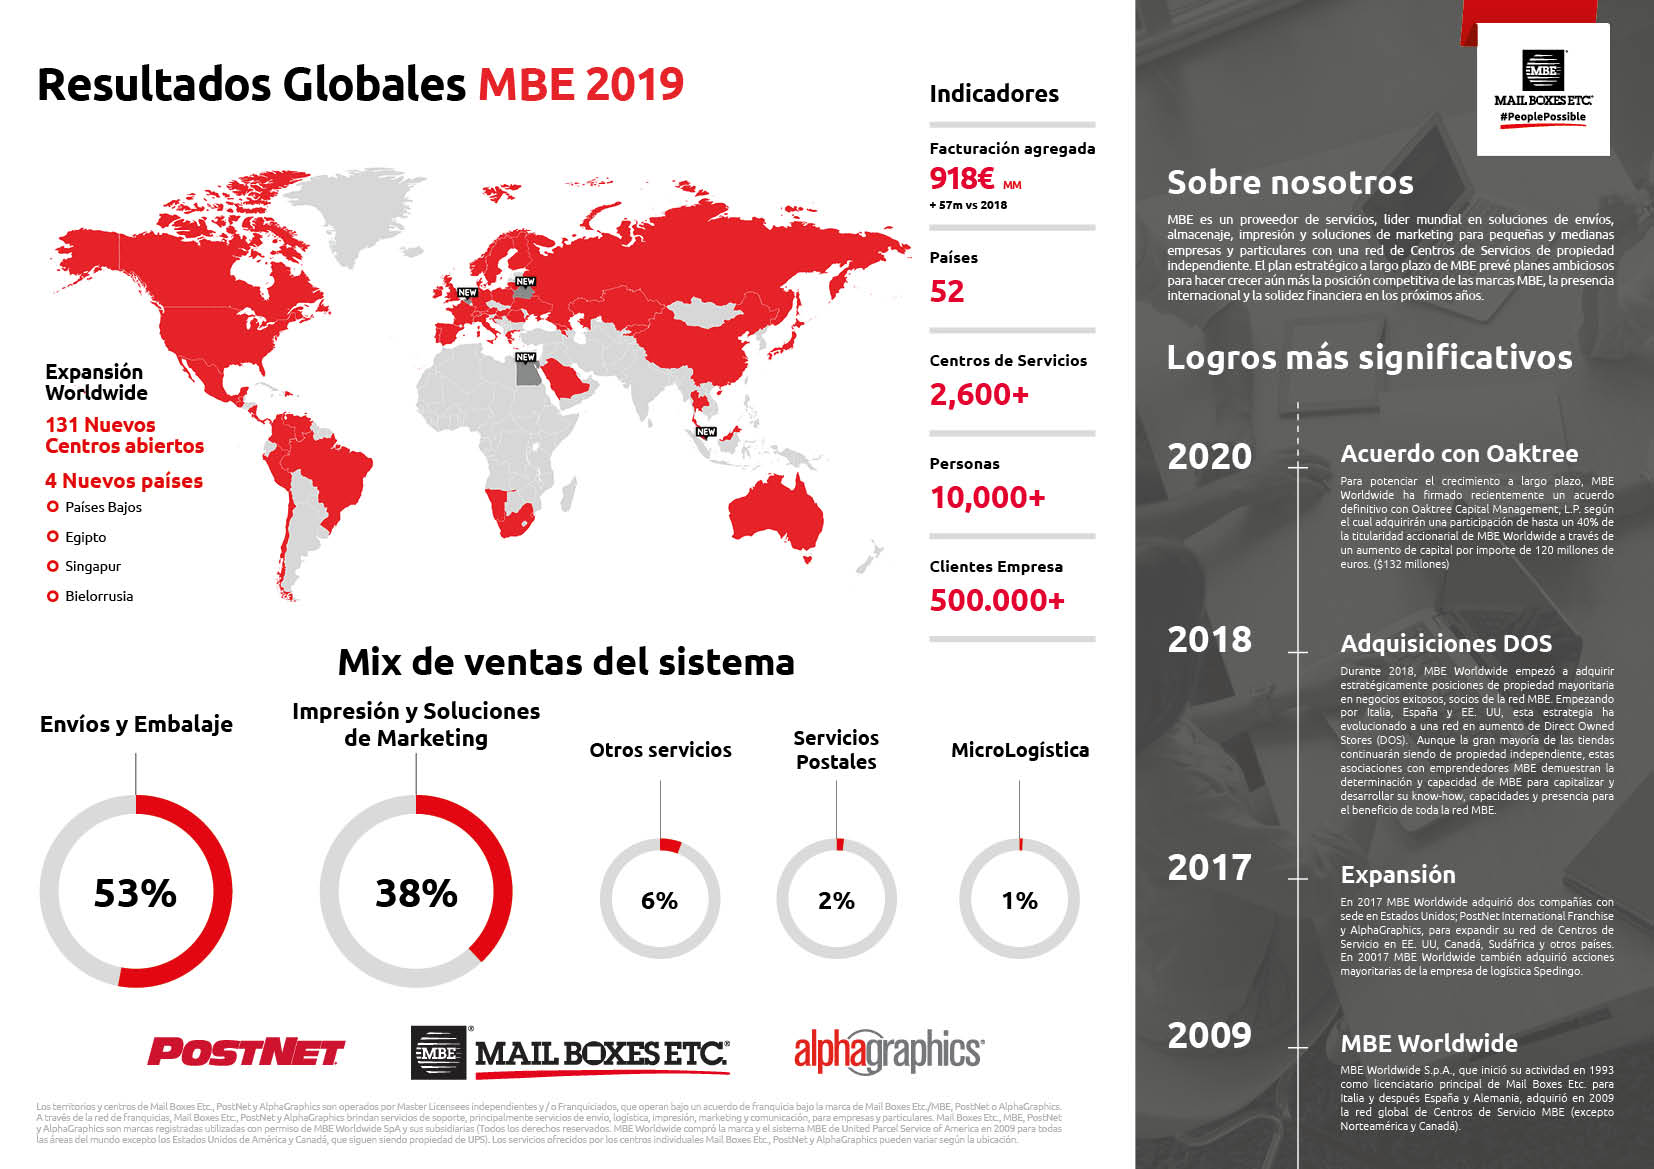 mbe worldwide resultados 2019